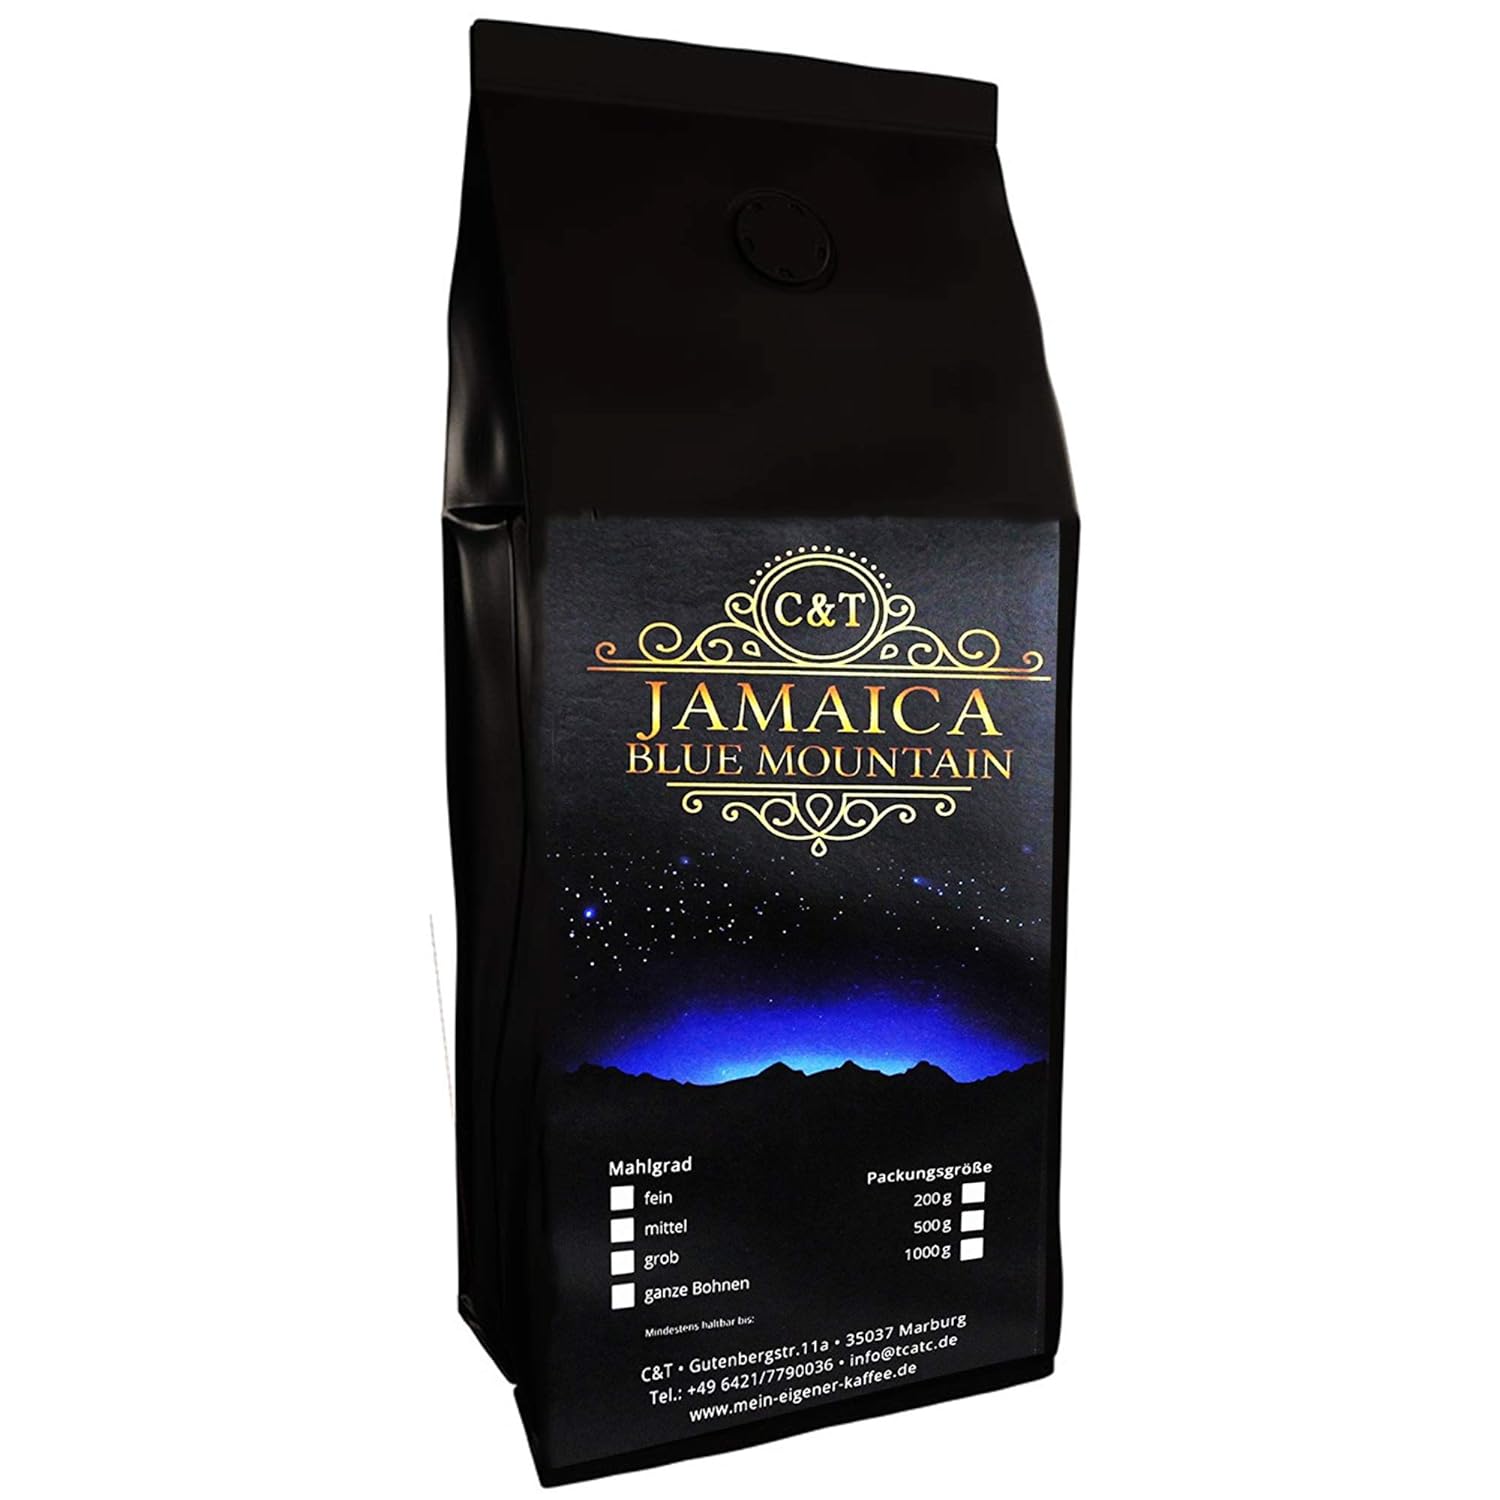 C&T 100% Jamaica Blue Mountain Aa Wallenford Estate 200 g whole beans Sortininrein Singe Origin Rarity from Jamaica